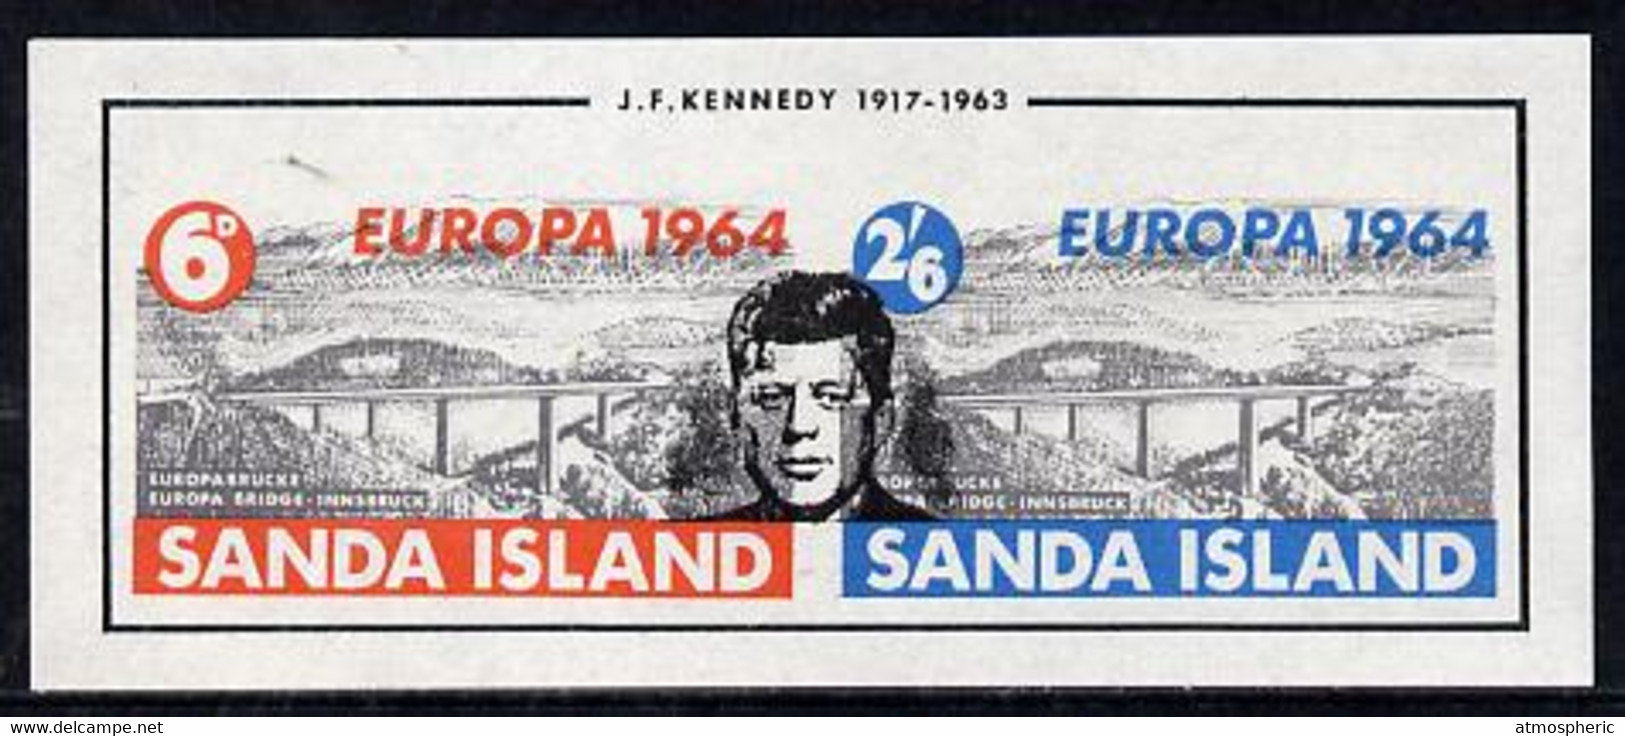 Sanda Island 1964 Europa Bridge Imperf M/sheet Opt'd For J F Kennedy Memorial, U/M - Unclassified